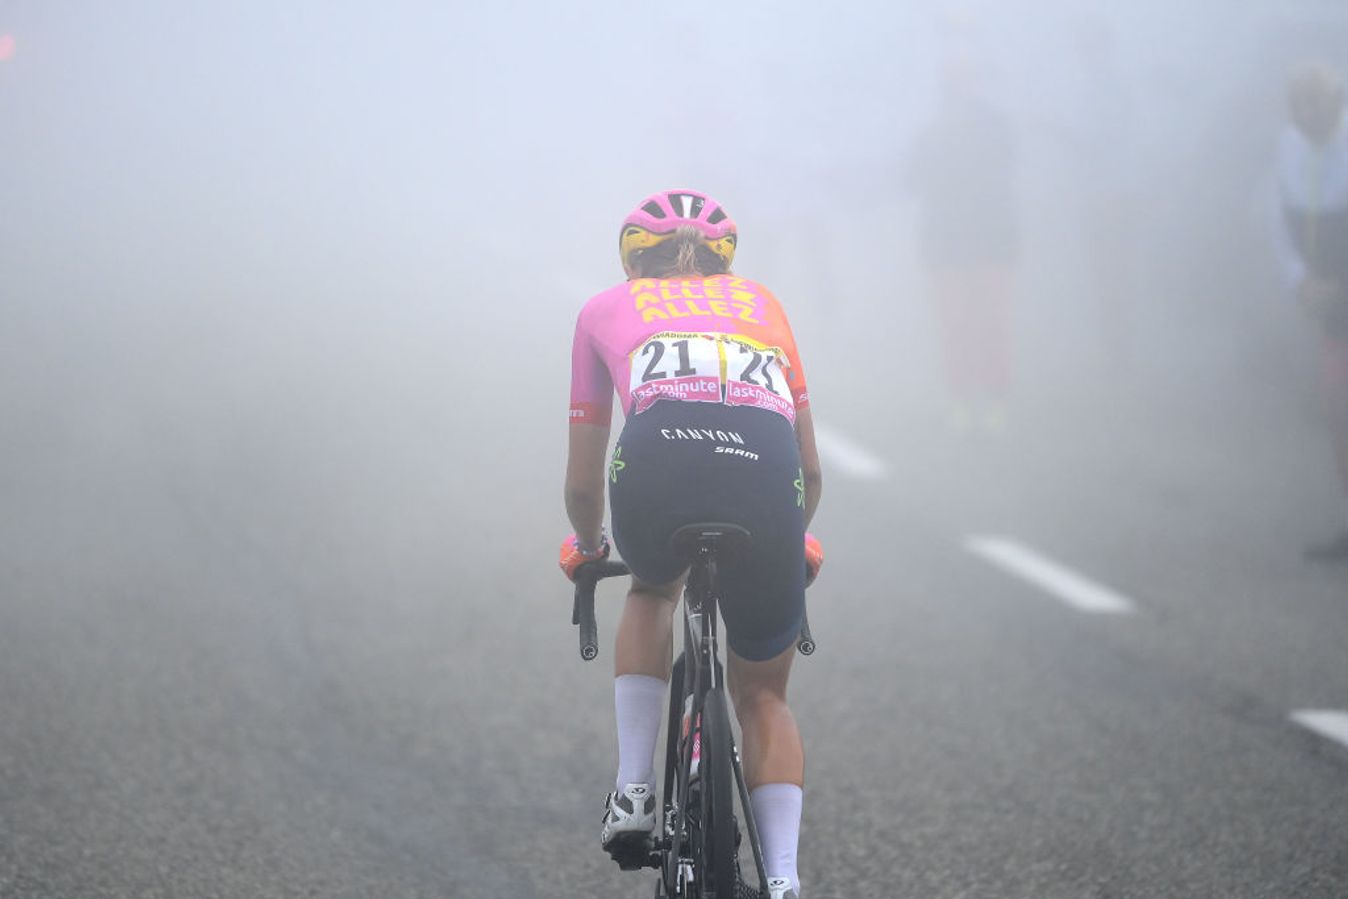 The Tour de France Femmes avec Zwift climbed the Tourmalet in 2023